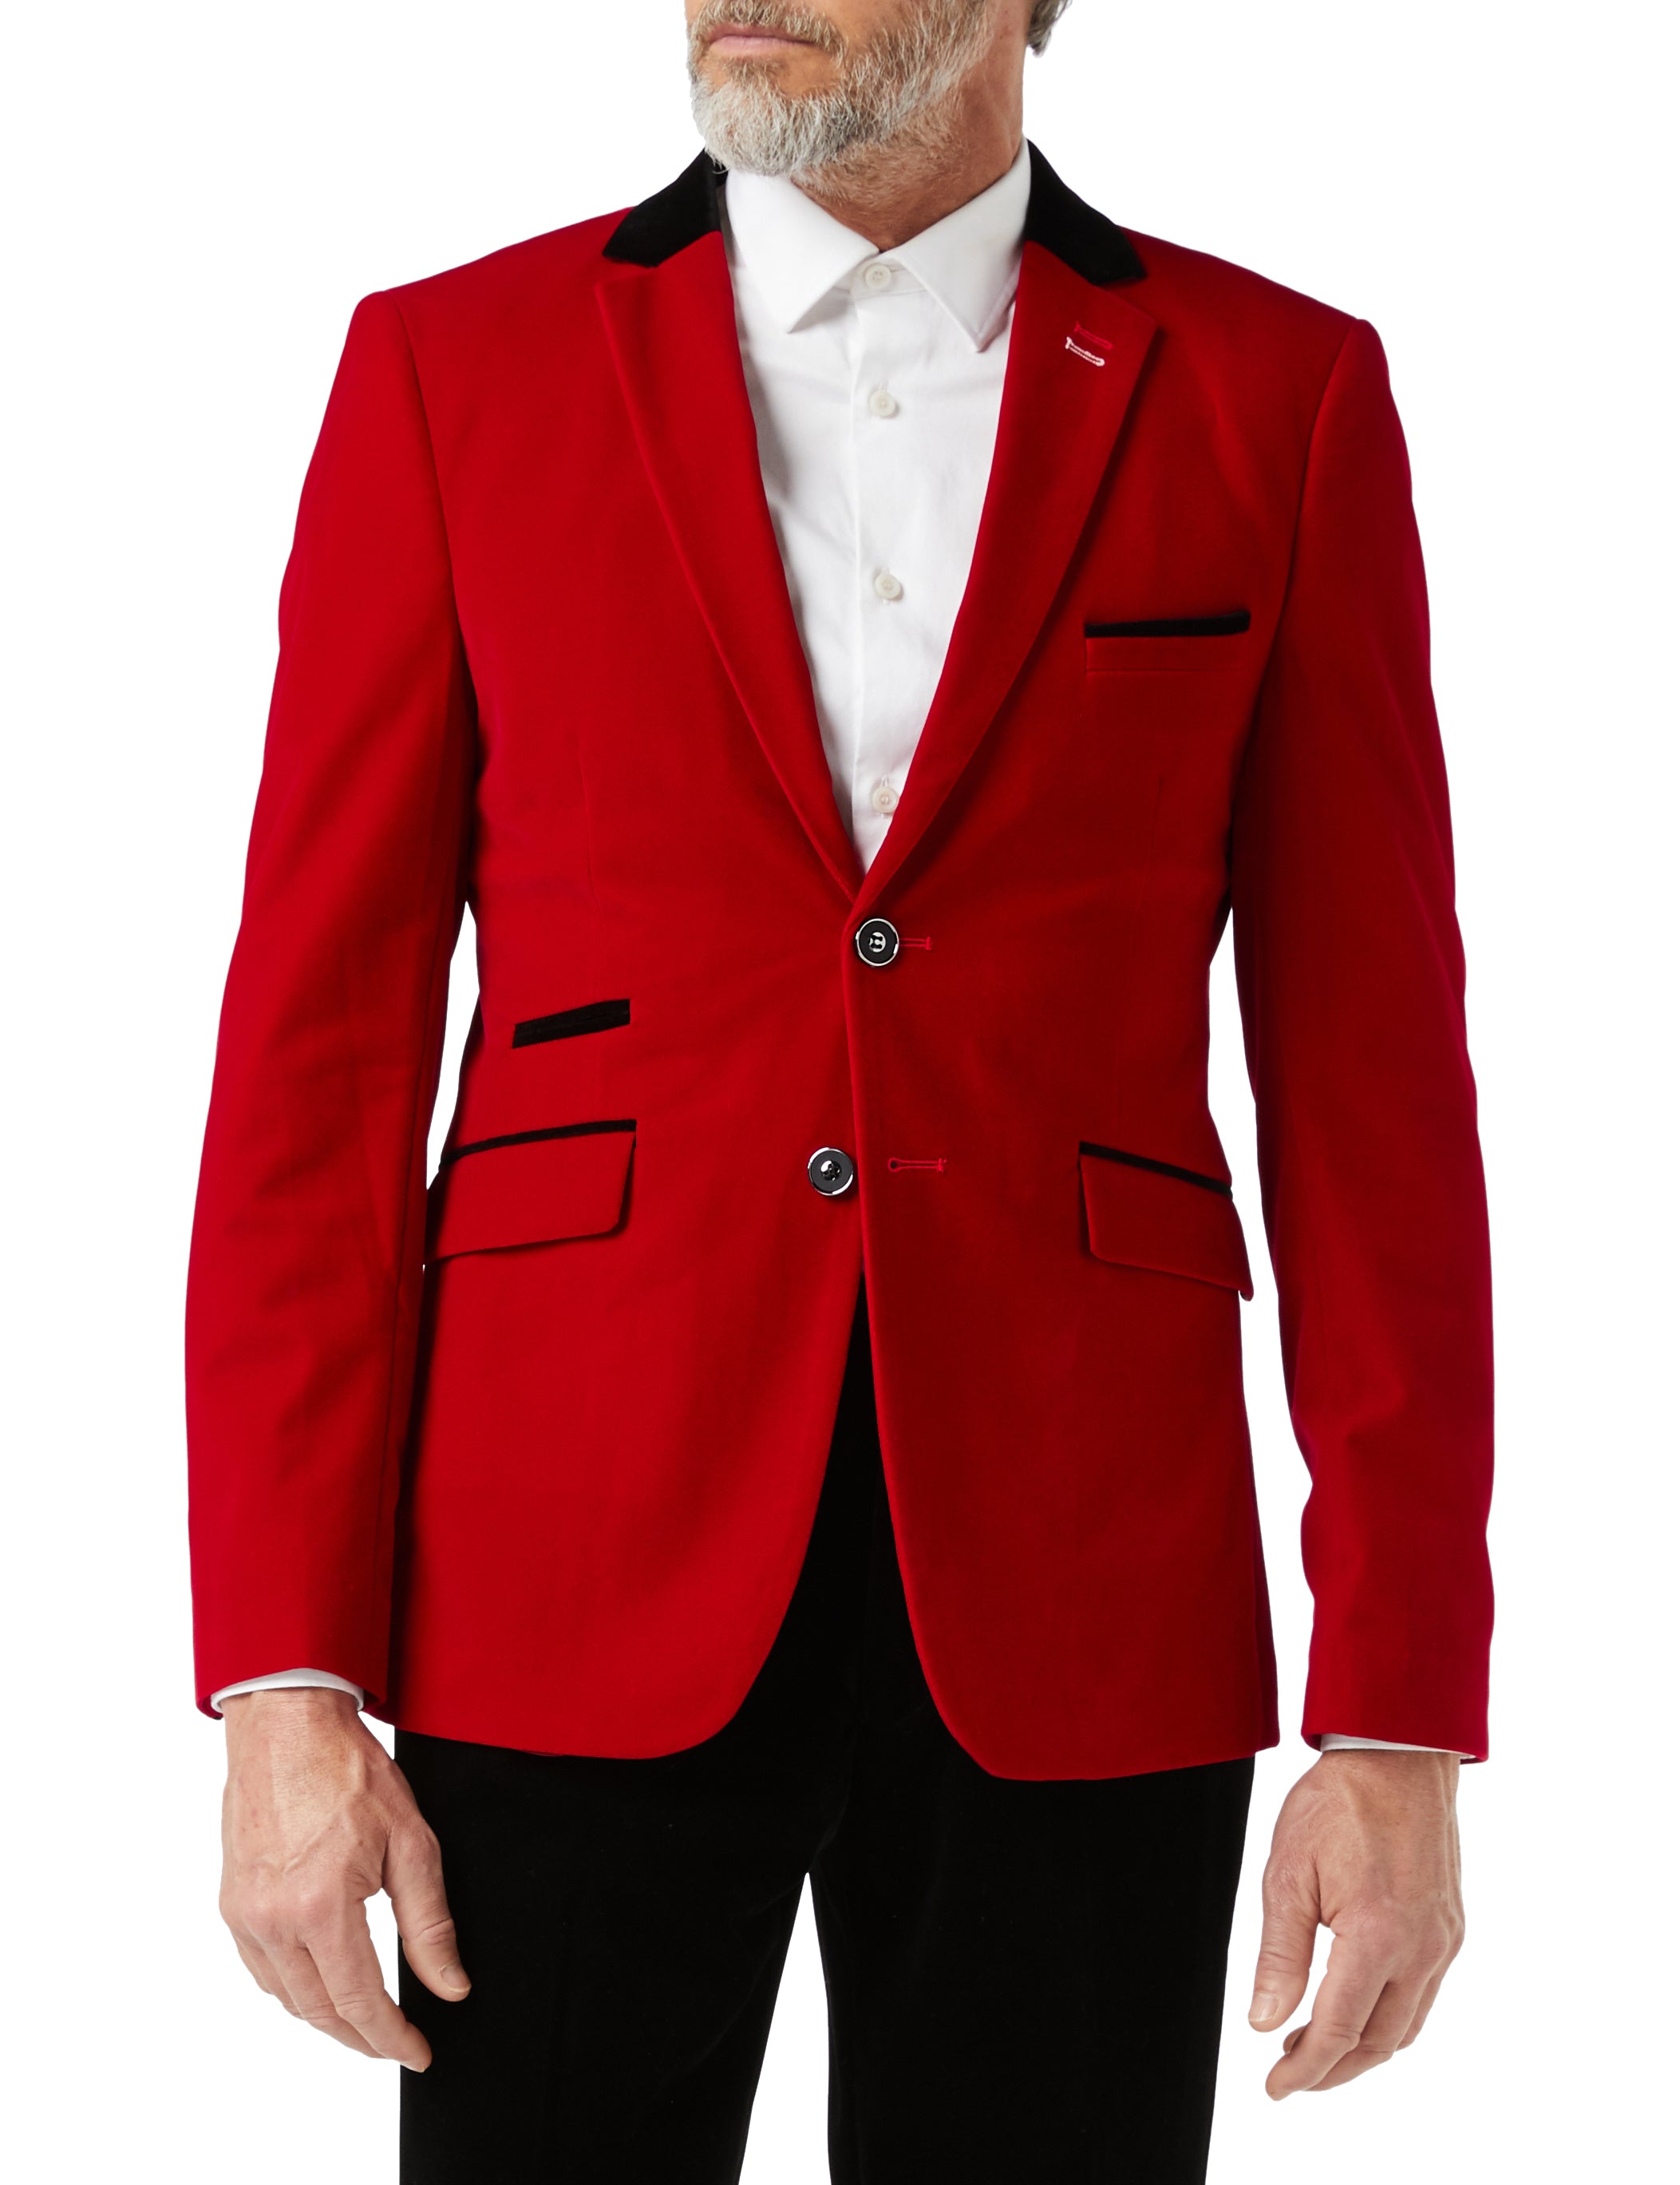 Pergine - Wine - Vibrant Red Velvet Tux Jacket | Tuxedos | Politix